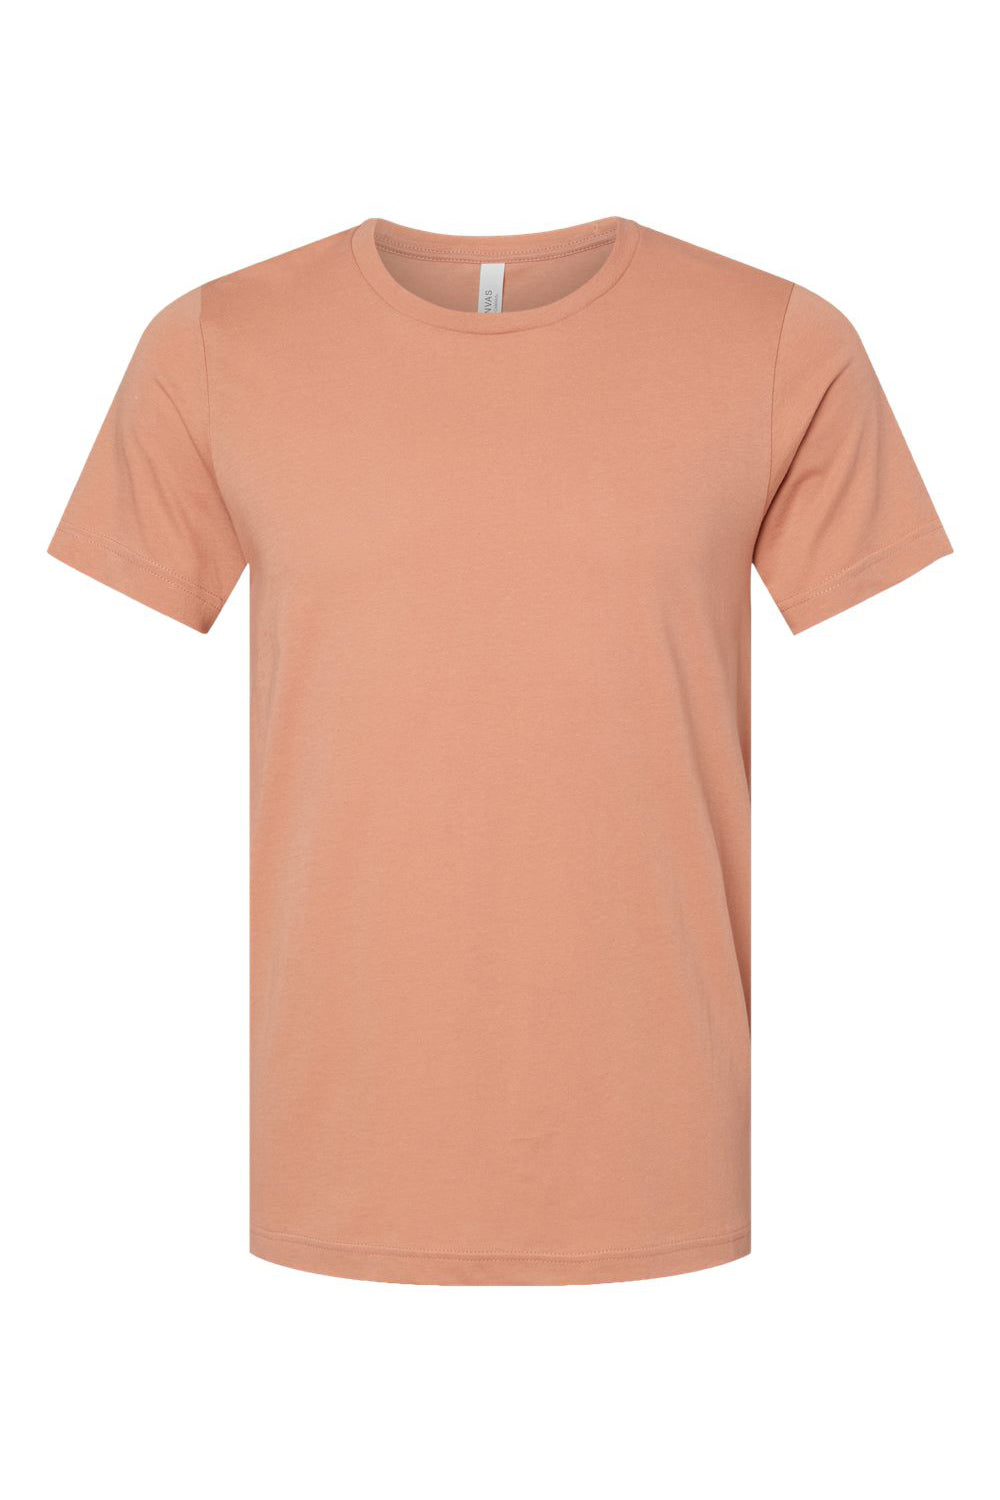 Bella + Canvas BC3001/3001C Mens Jersey Short Sleeve Crewneck T-Shirt Terracotta Flat Front